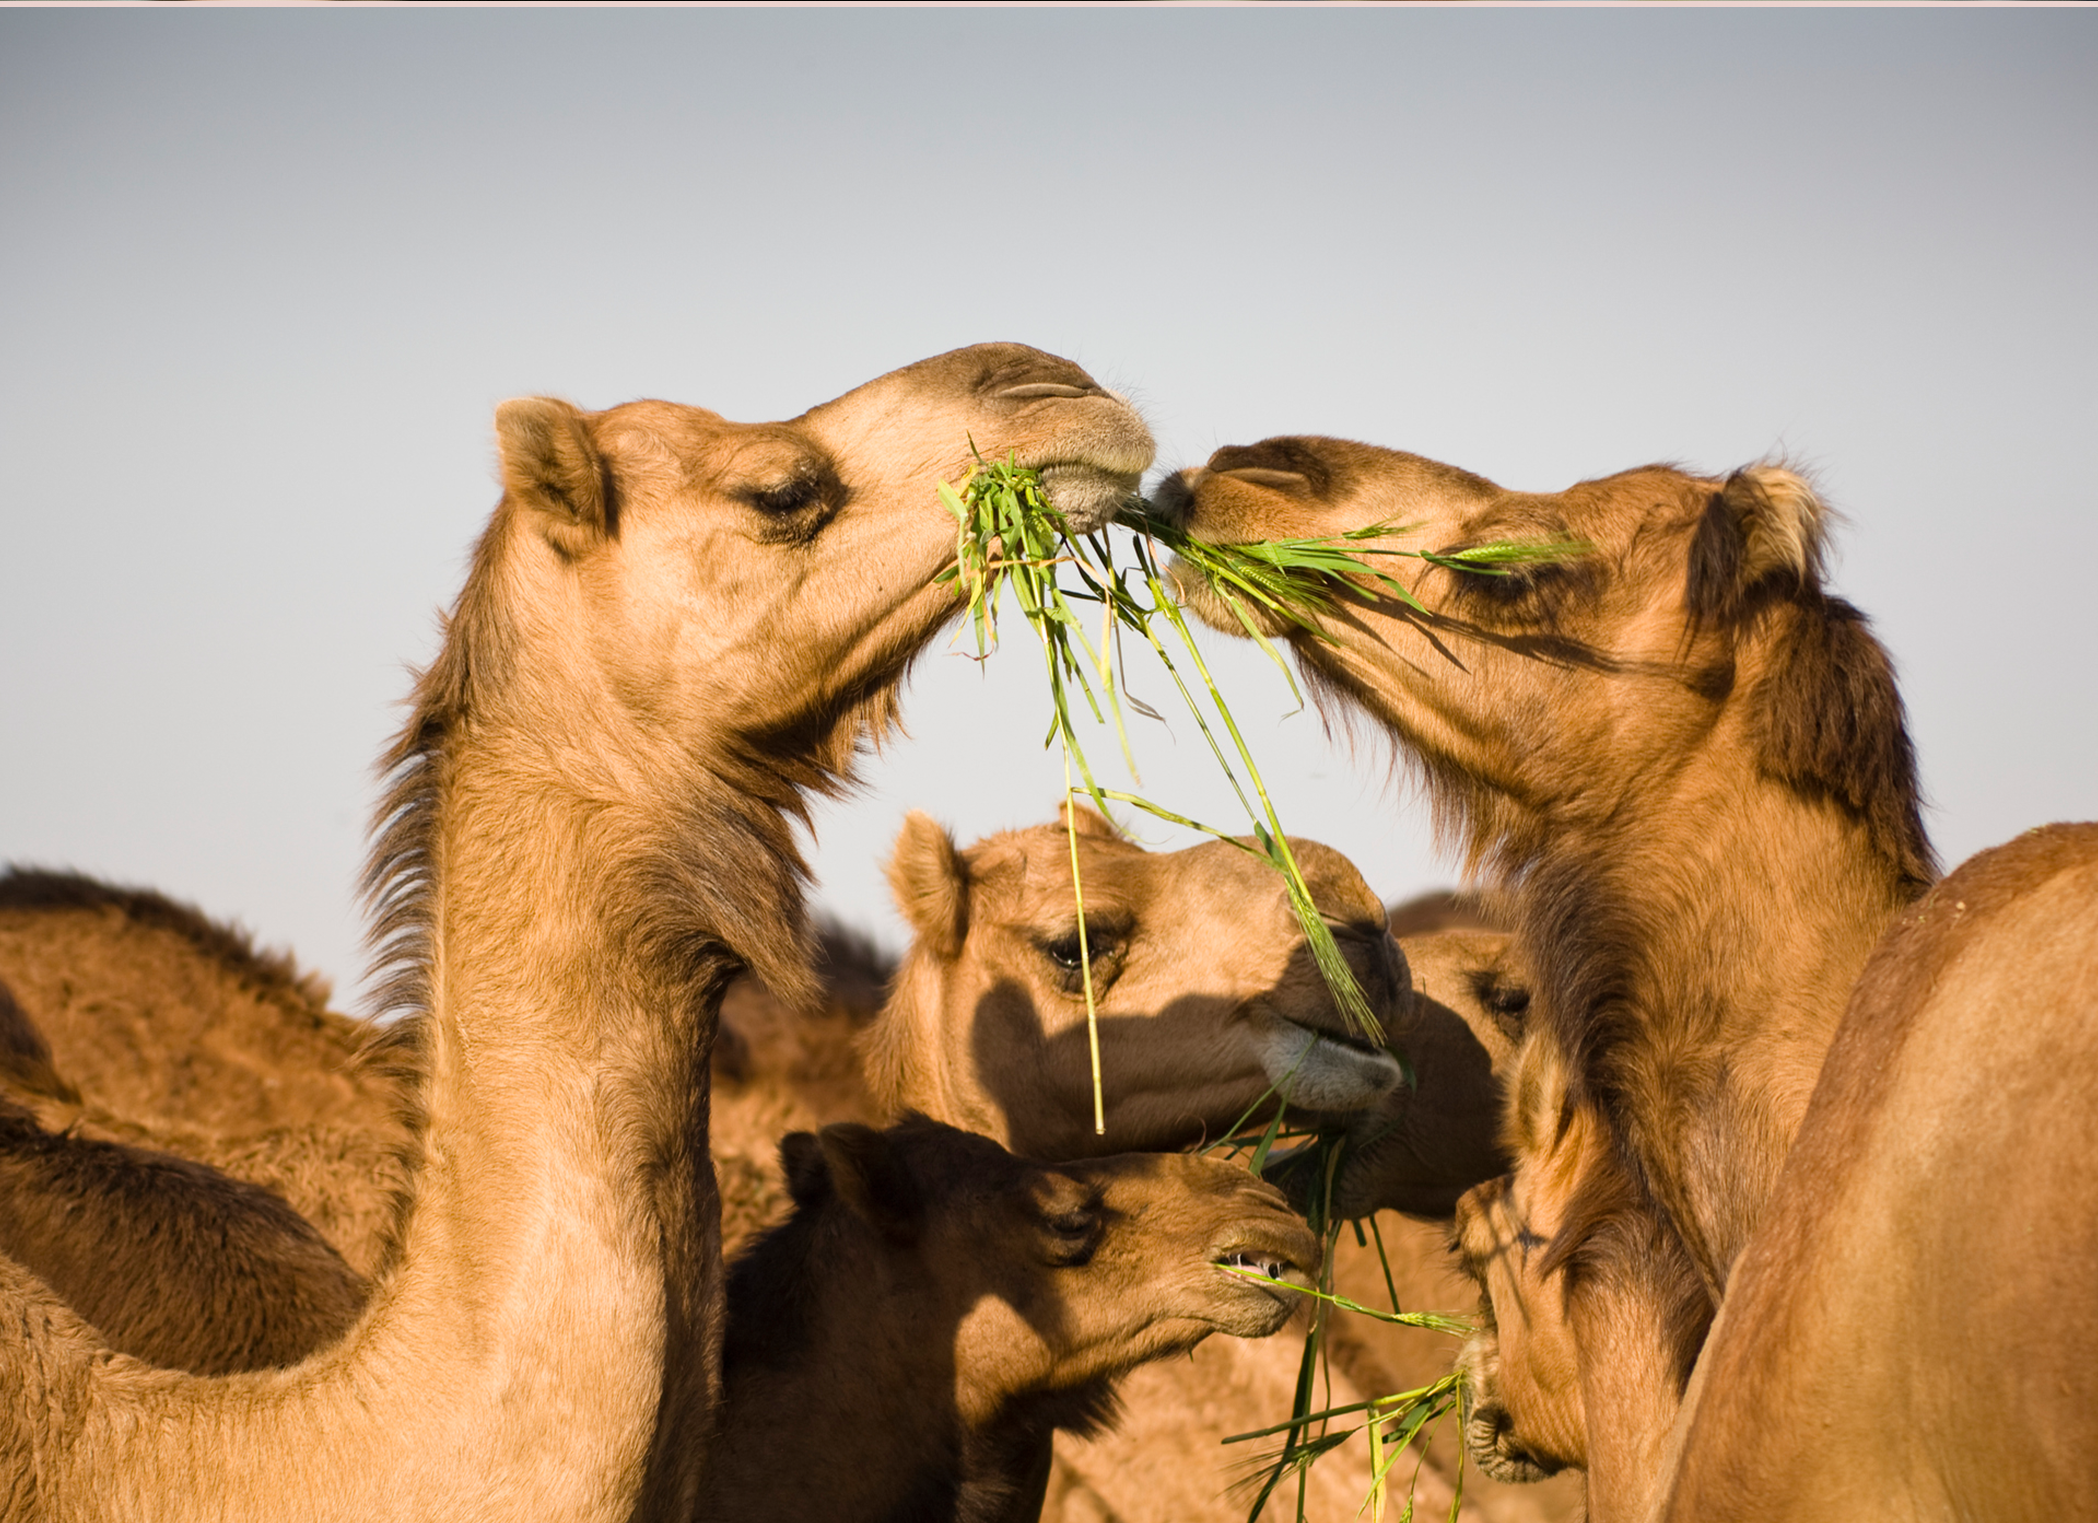 Horses, camels and deer get a bad rap for razing plants